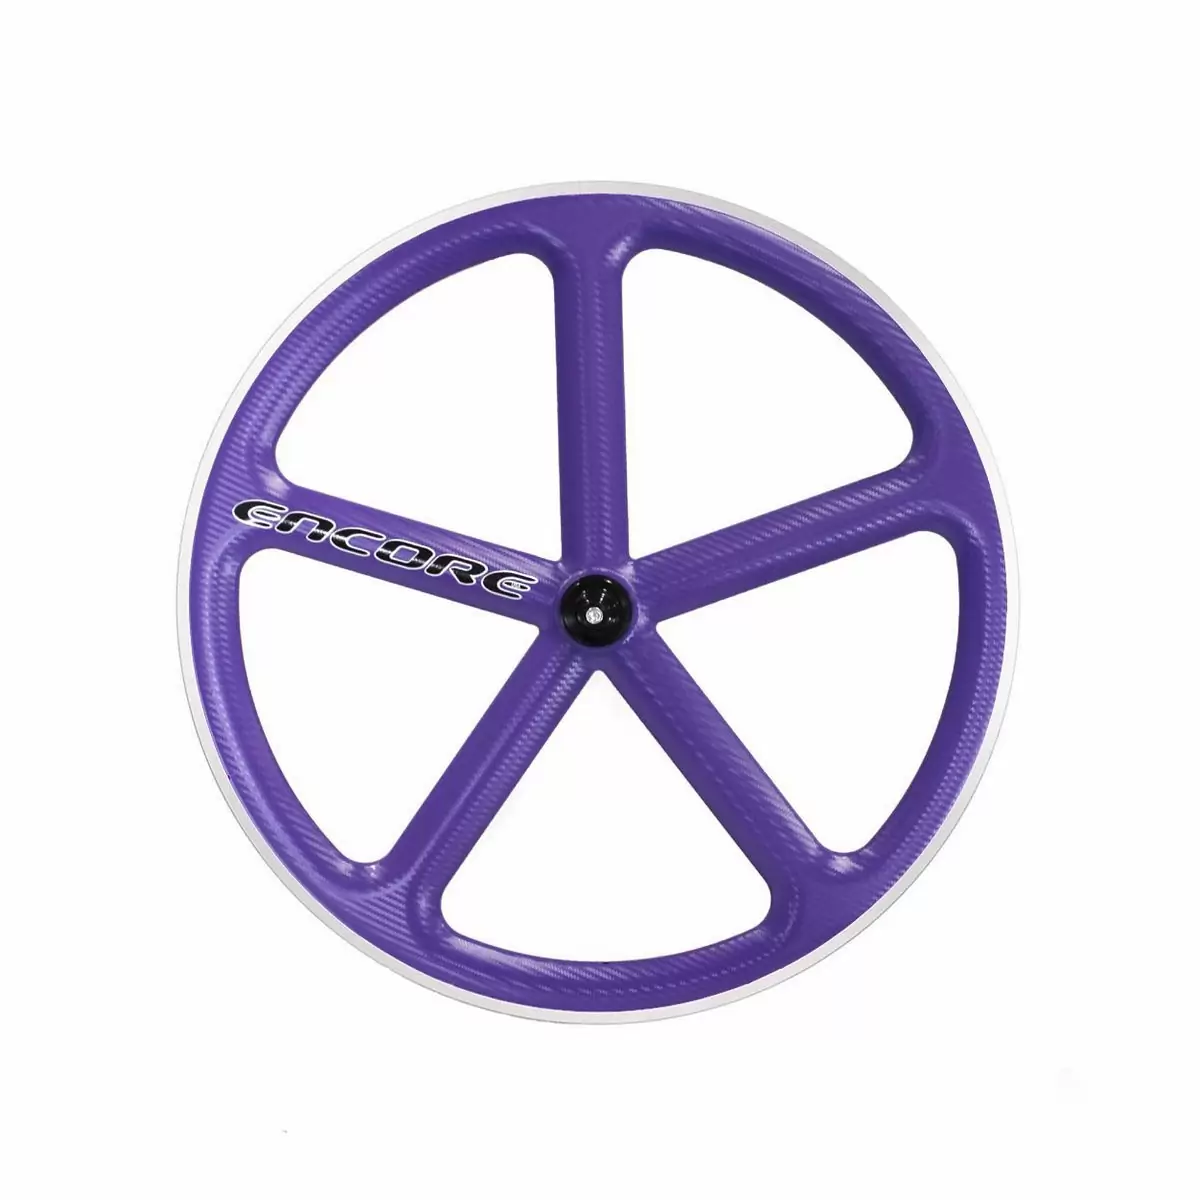 front wheel 700c track 5 spokes carbon weave purple msw - image